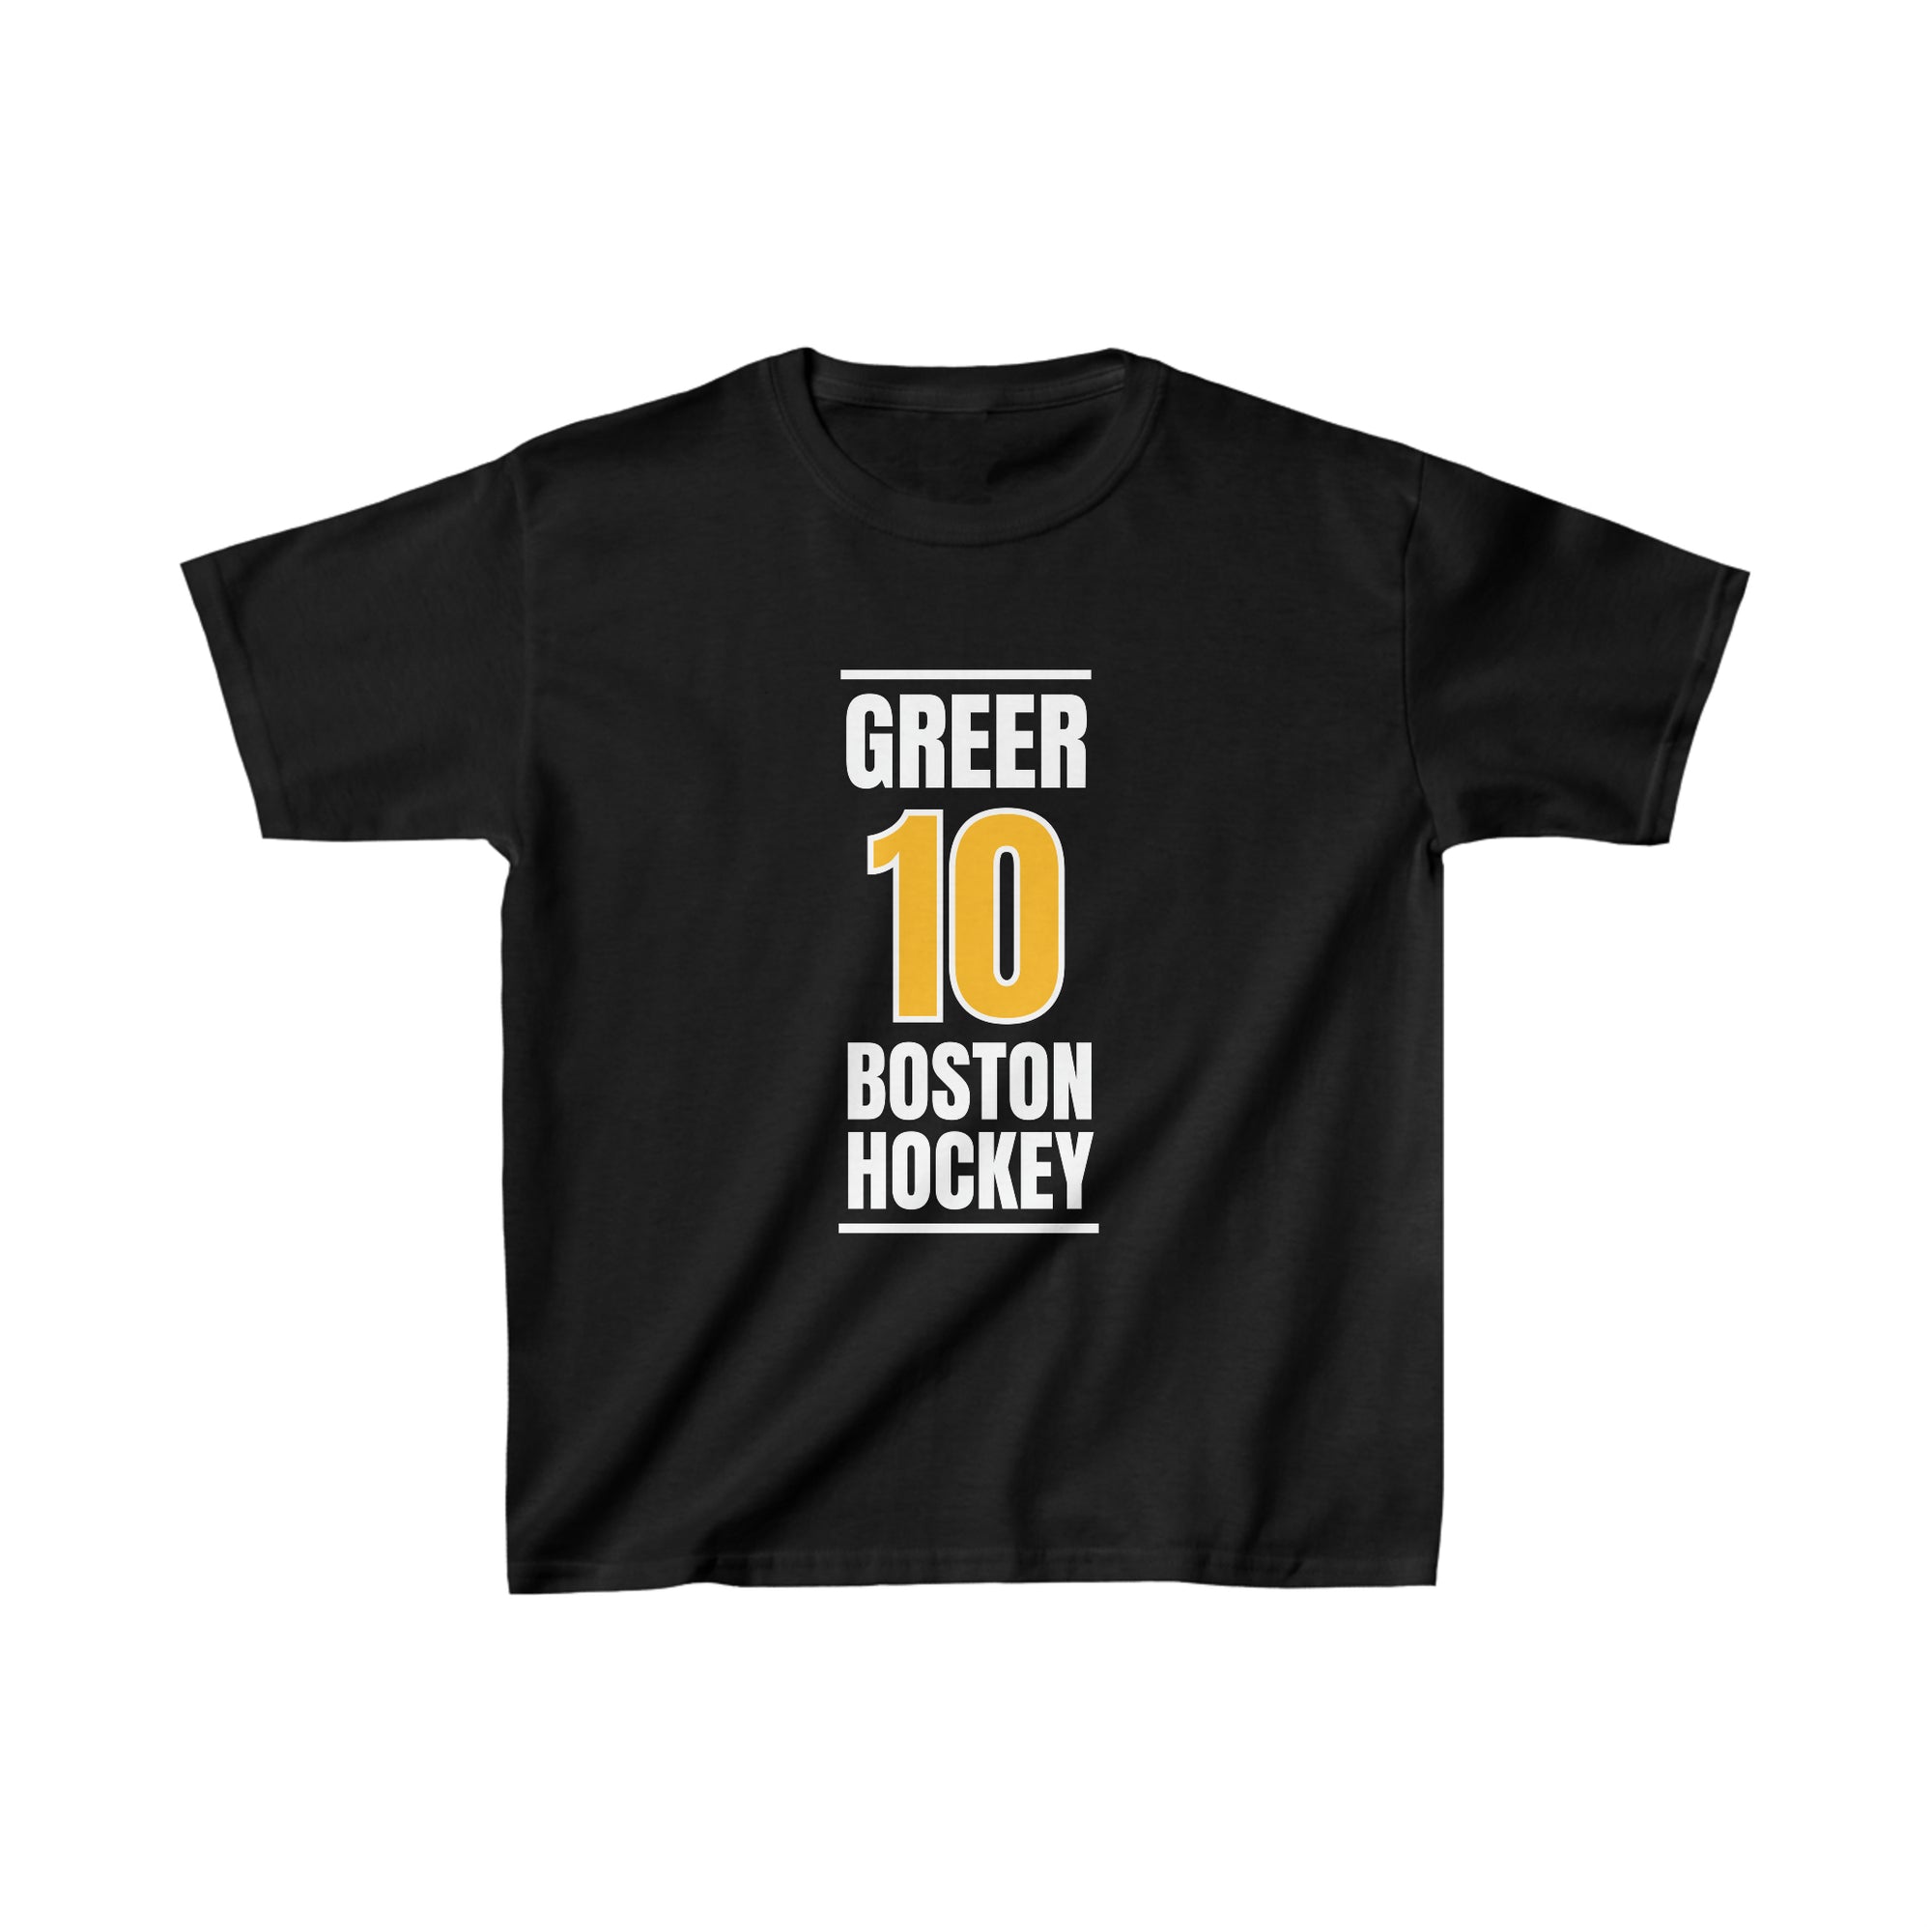 Greer 10 Boston Hockey Gold Vertical Design Kids Tee